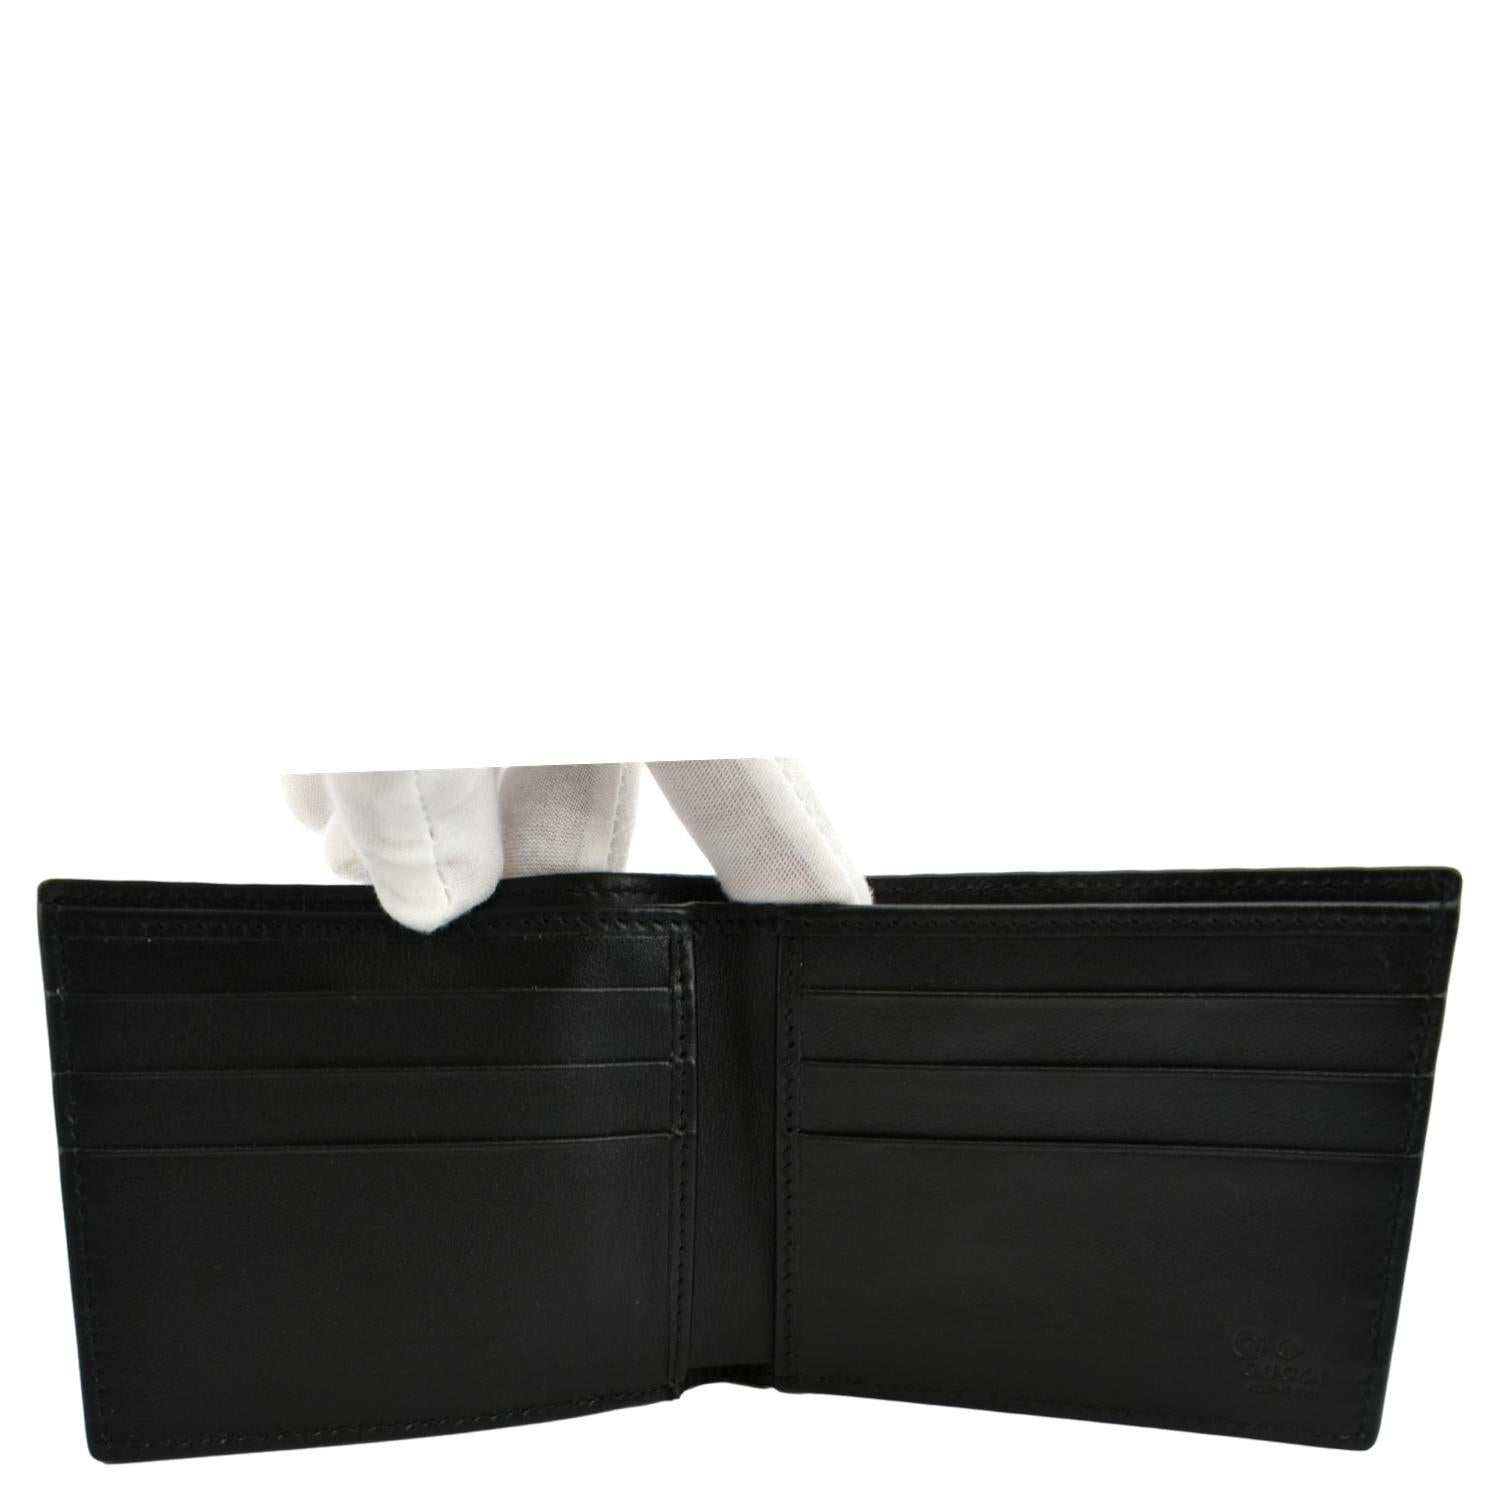 GUCCI Microguccissima Leather Wallet, Black 260987